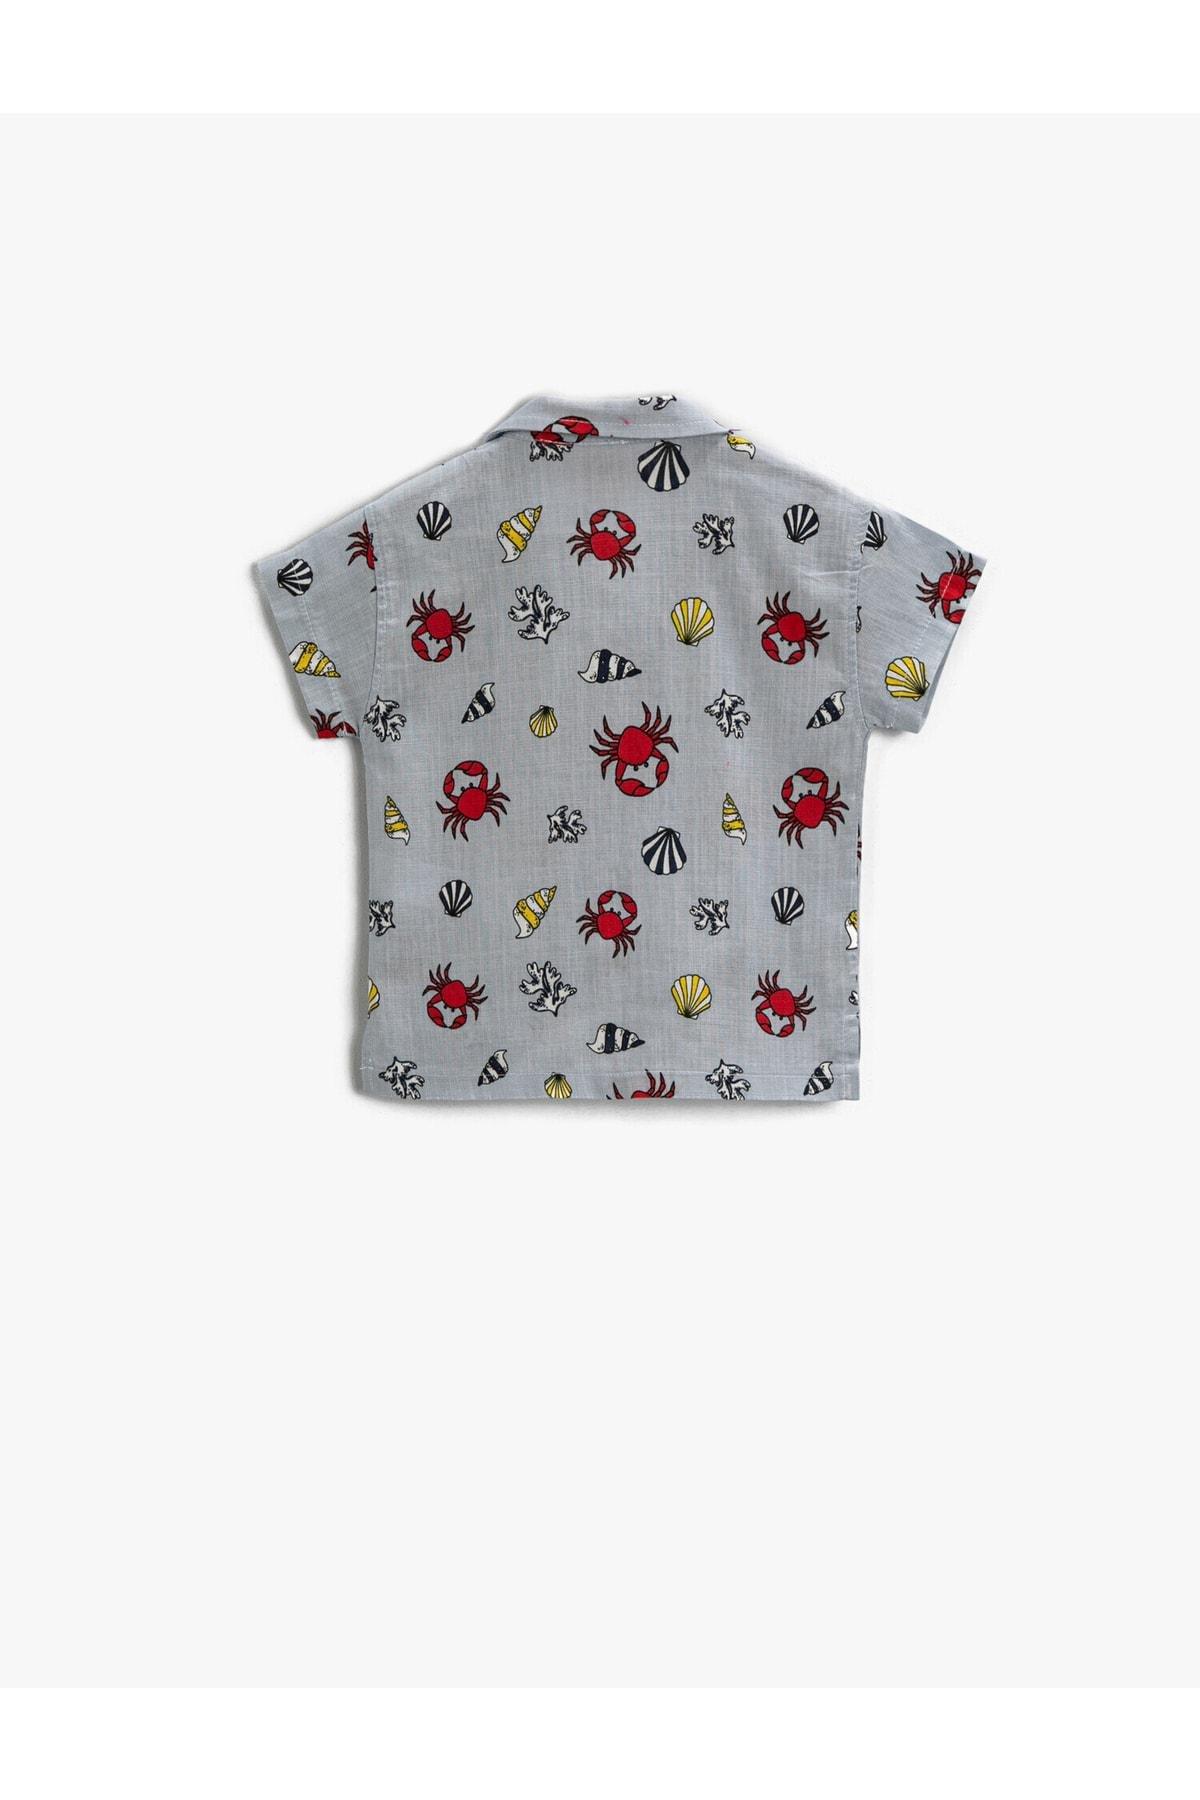 Koton - Grey Pattern Shirt, Kids Boys